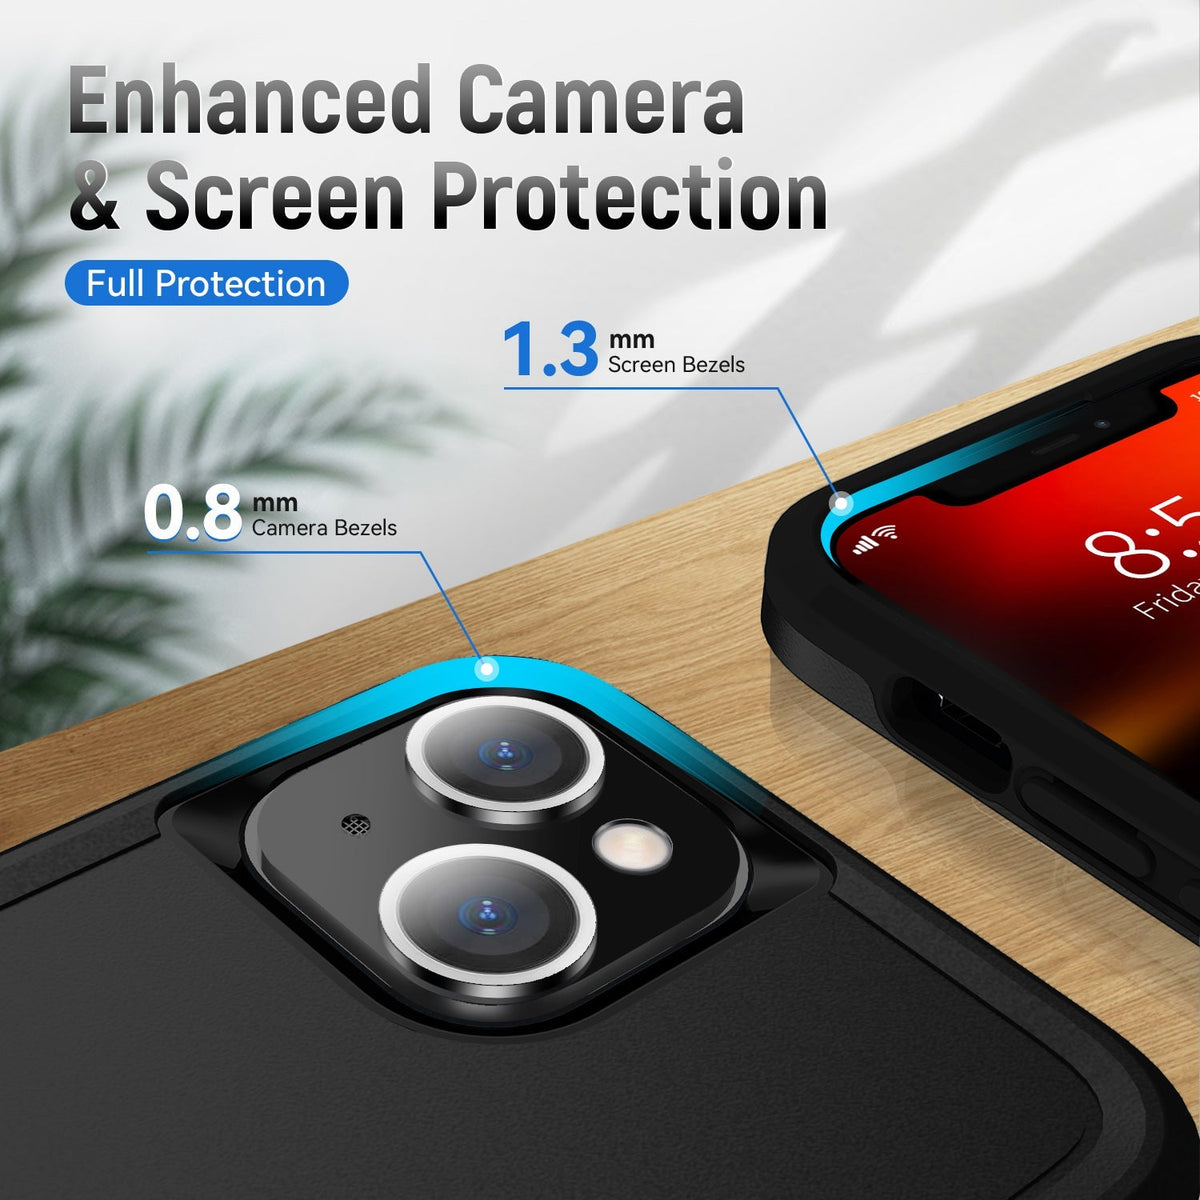 Phonix Black Armor Light Case For Samsung Z Fold 4 & Flip 4